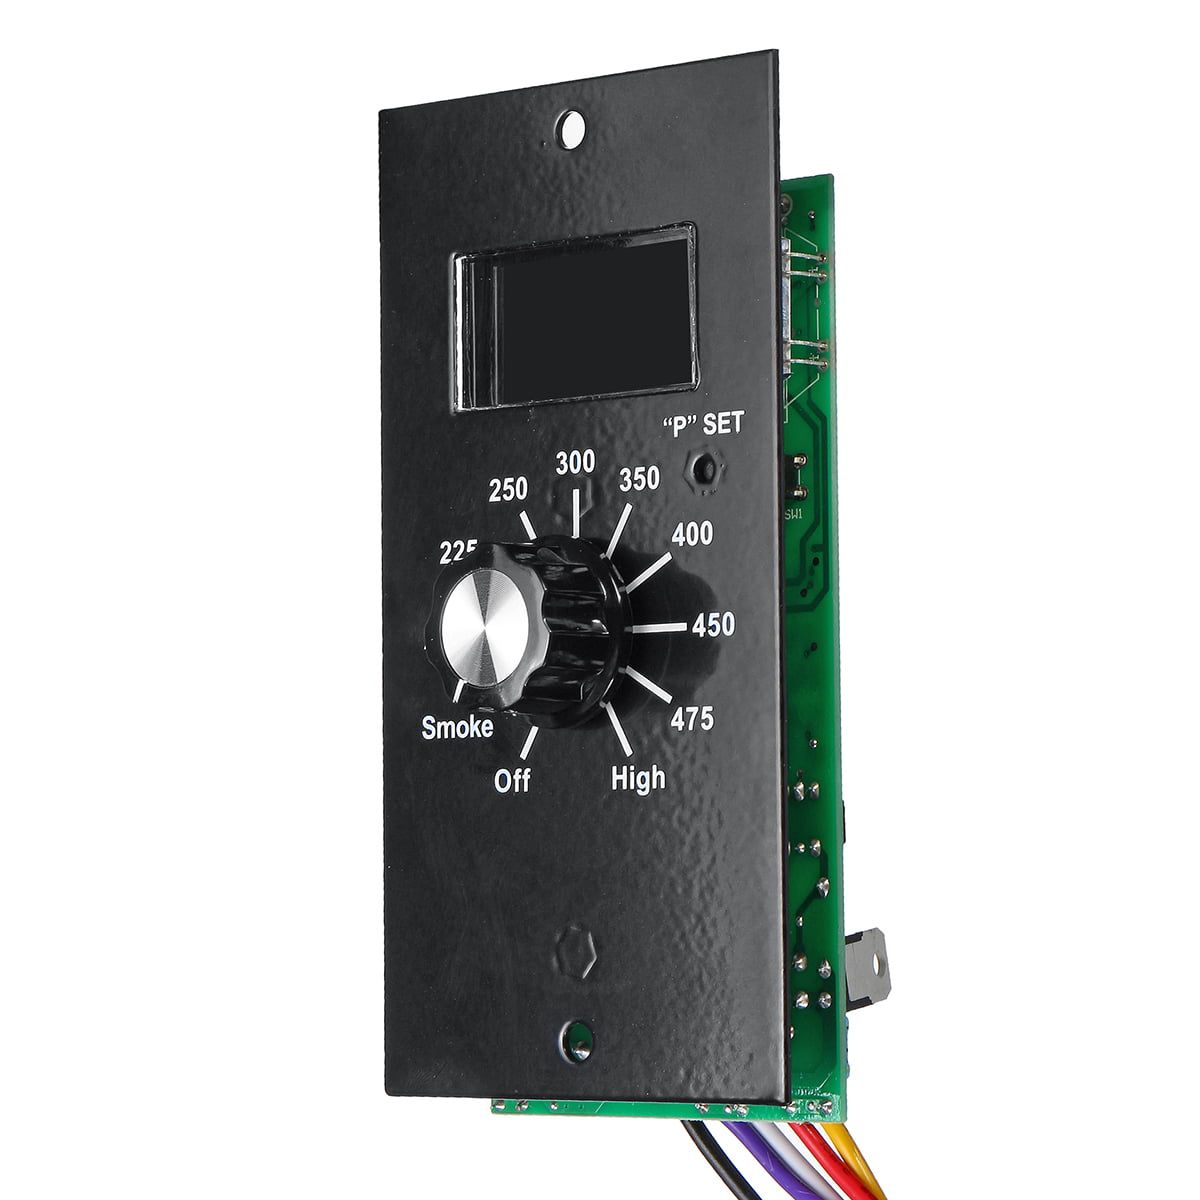 Digital Thermostat Controller Board For TRAEGER Pit Boss Pellet Grill+Temp